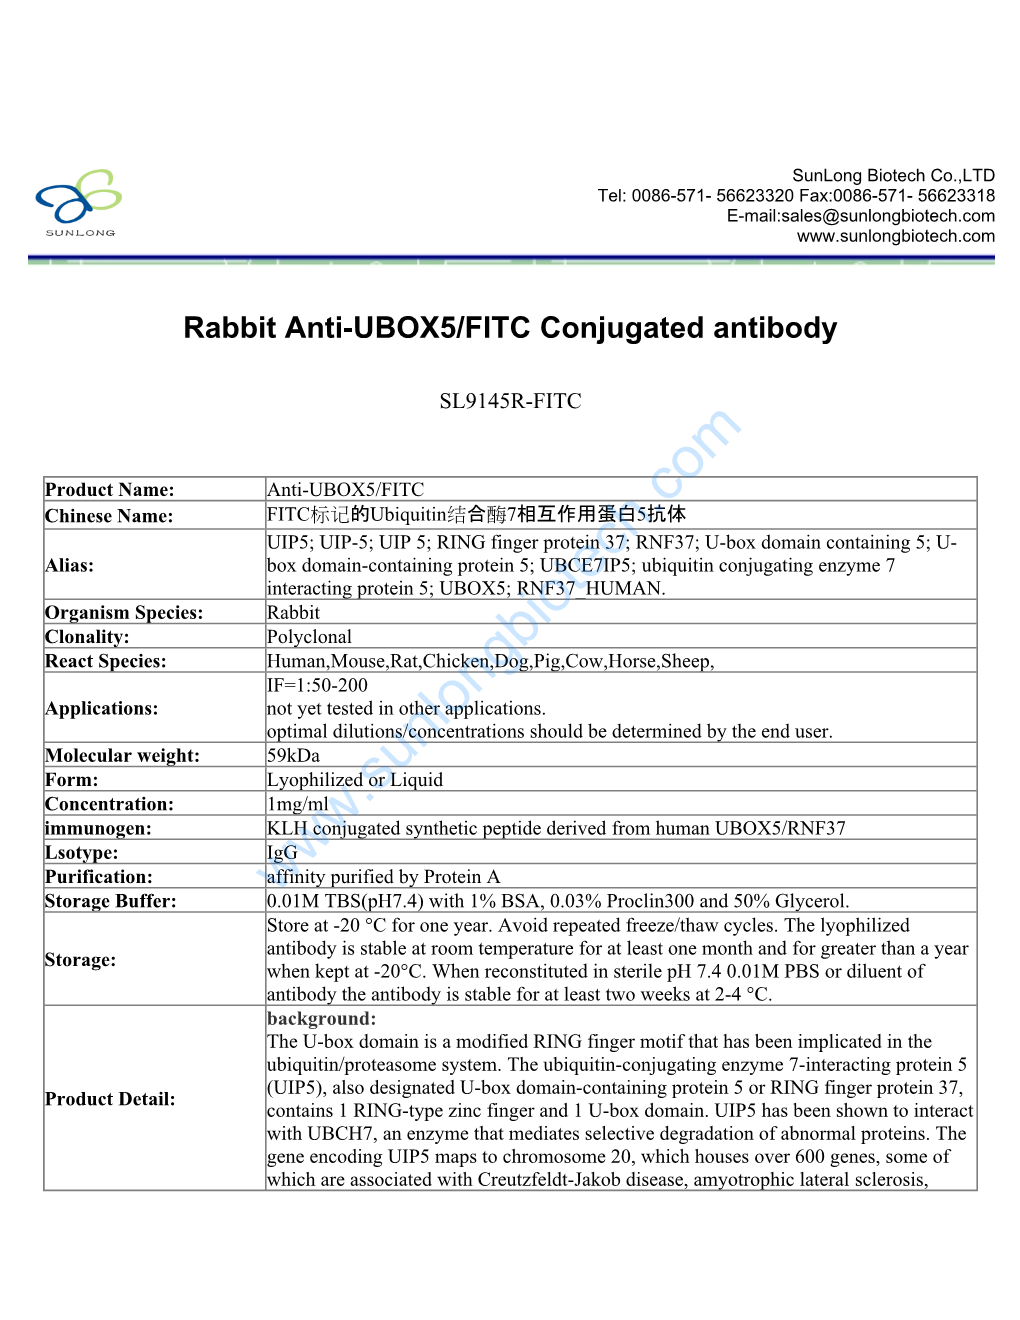 Rabbit Anti-UBOX5/FITC Conjugated Antibody